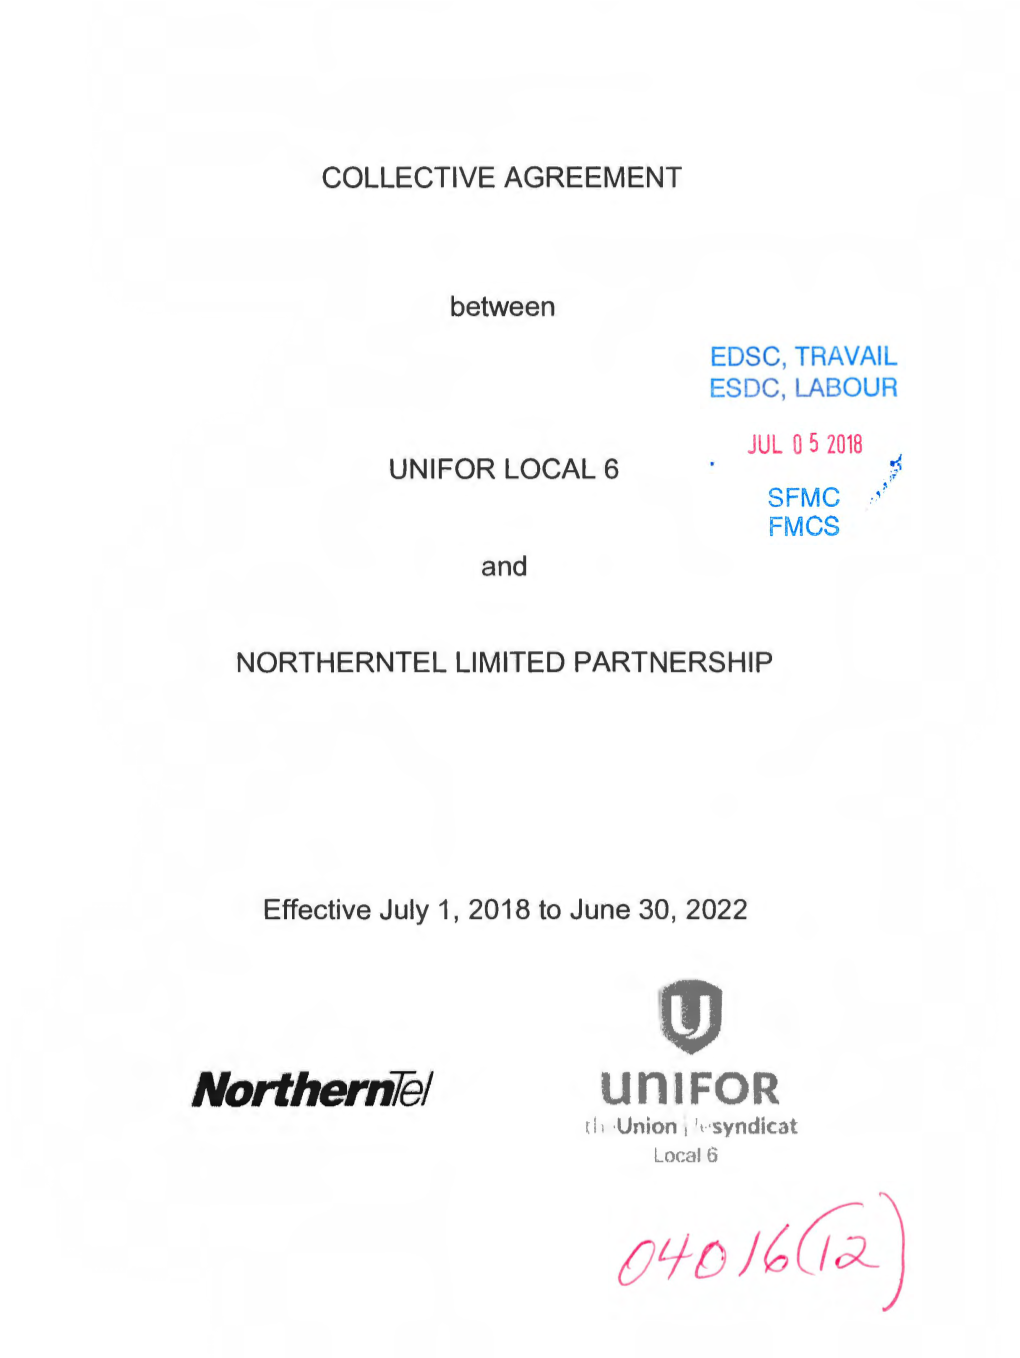 Northerntel Limited Partnership